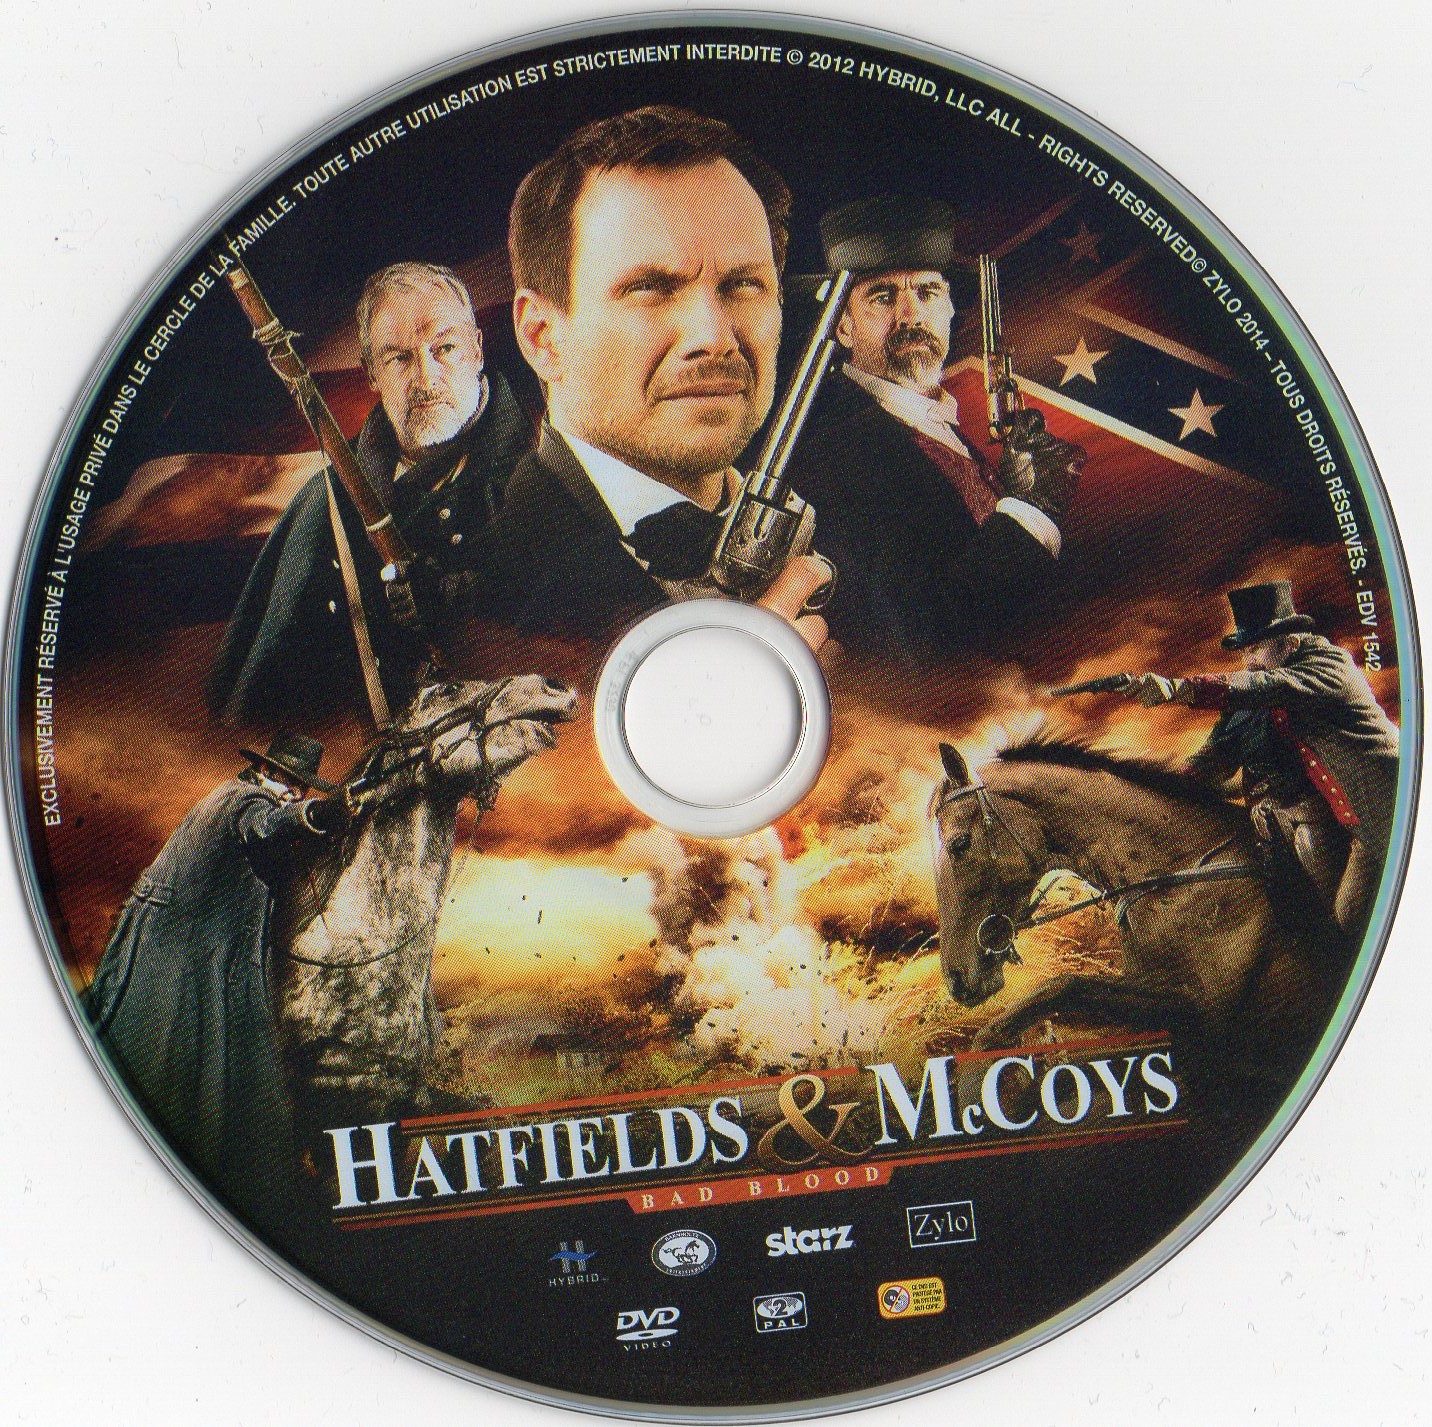 Hatfields & McCoys - Bad blood